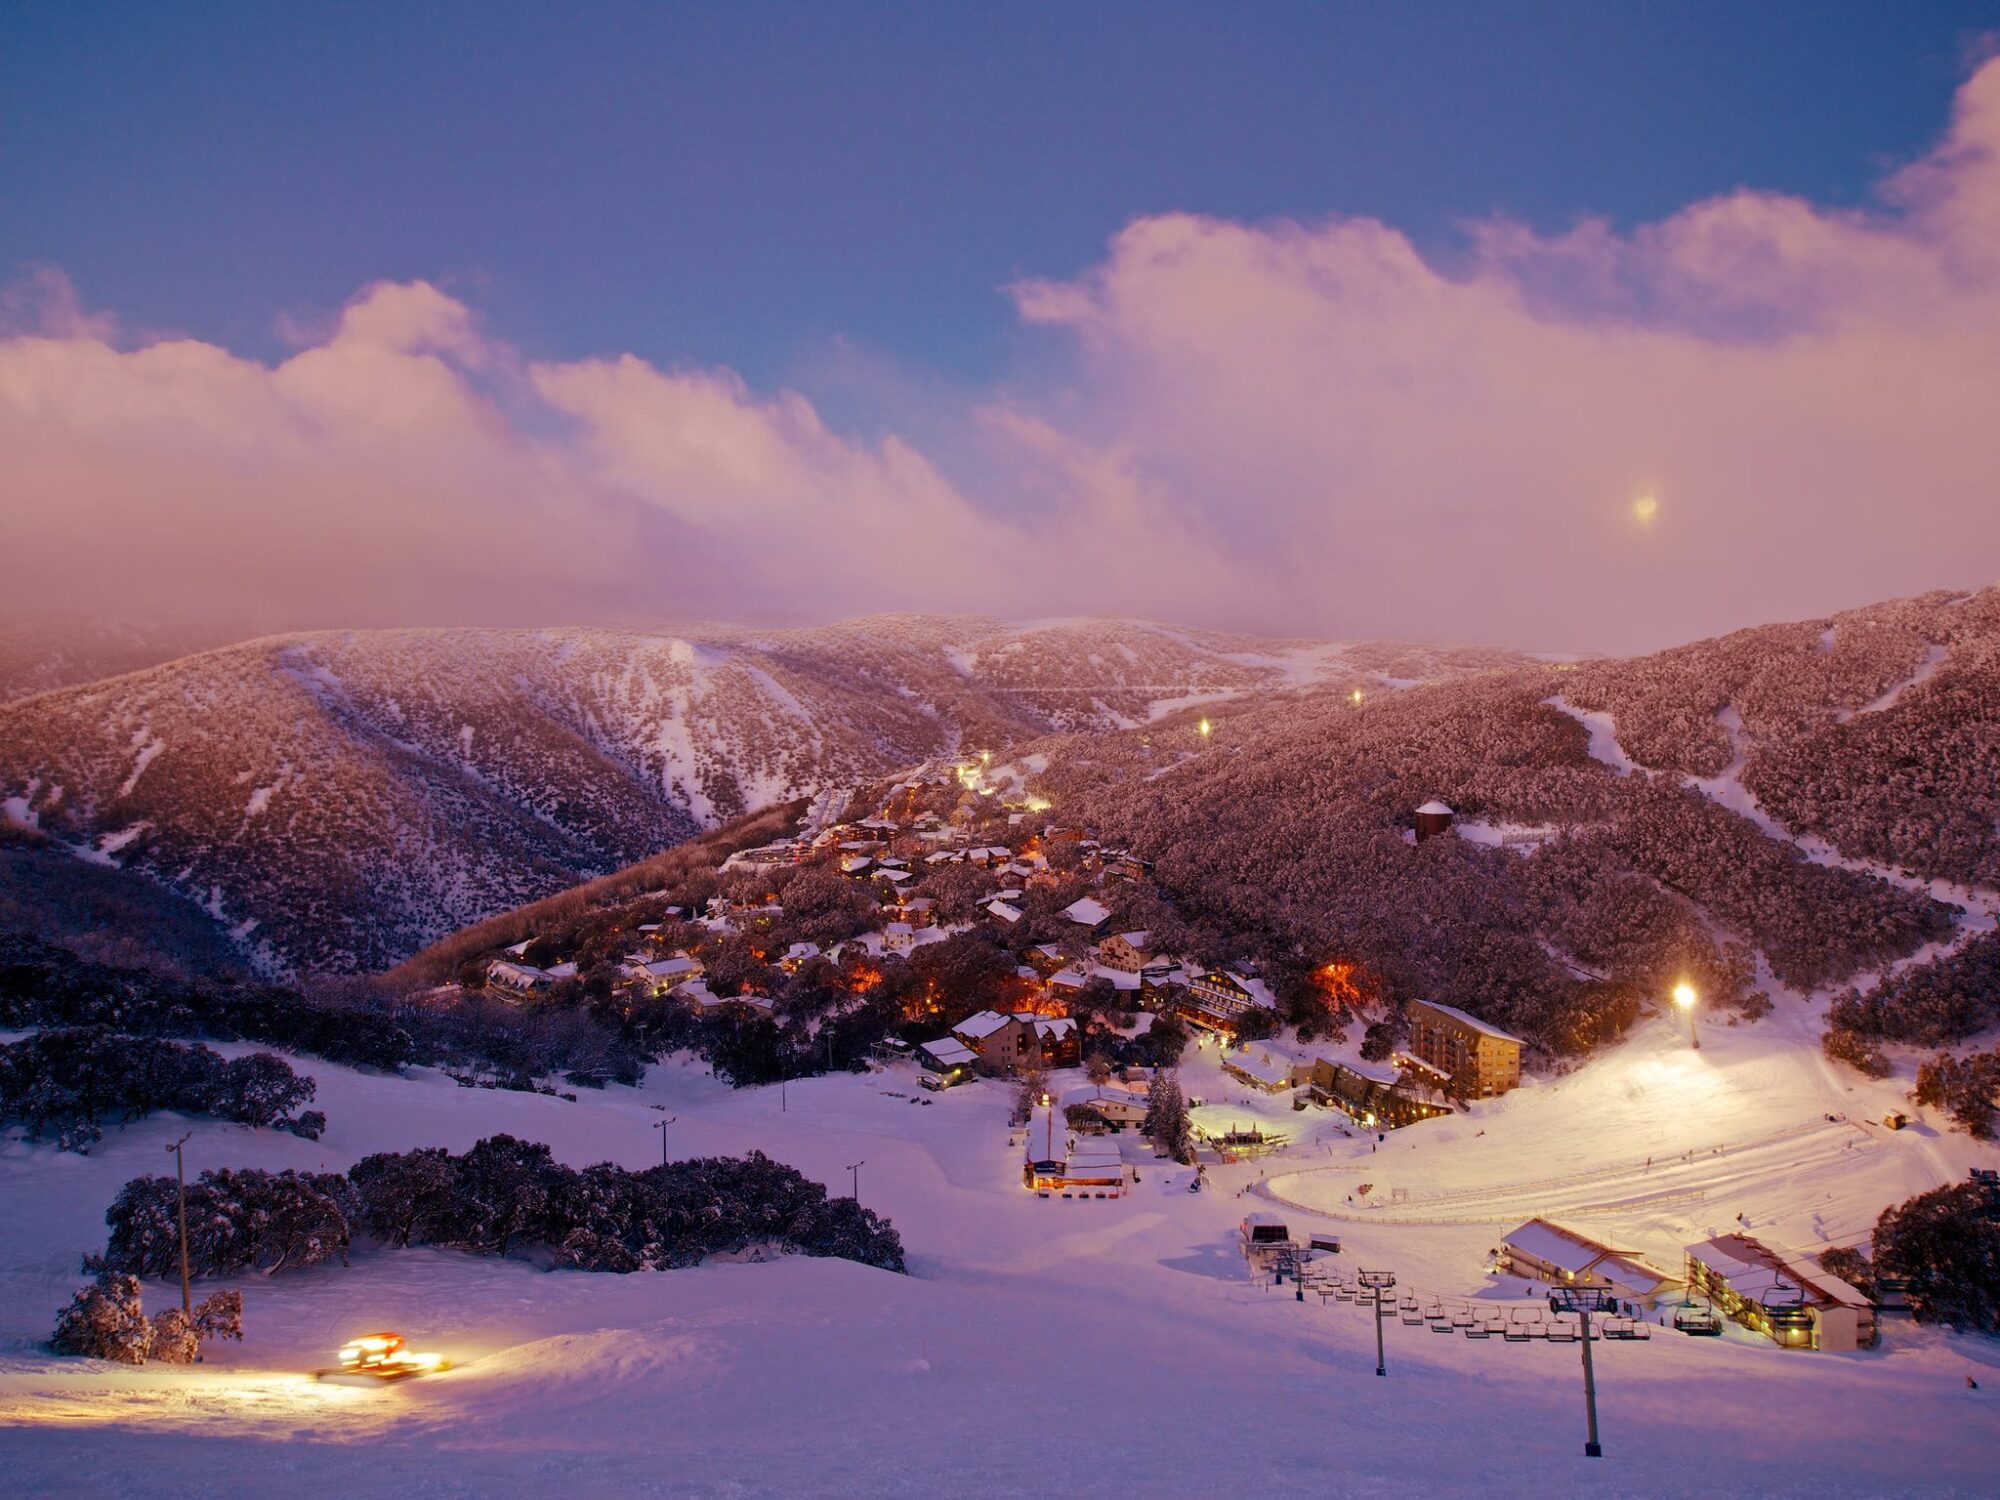 Snow Village at dusk